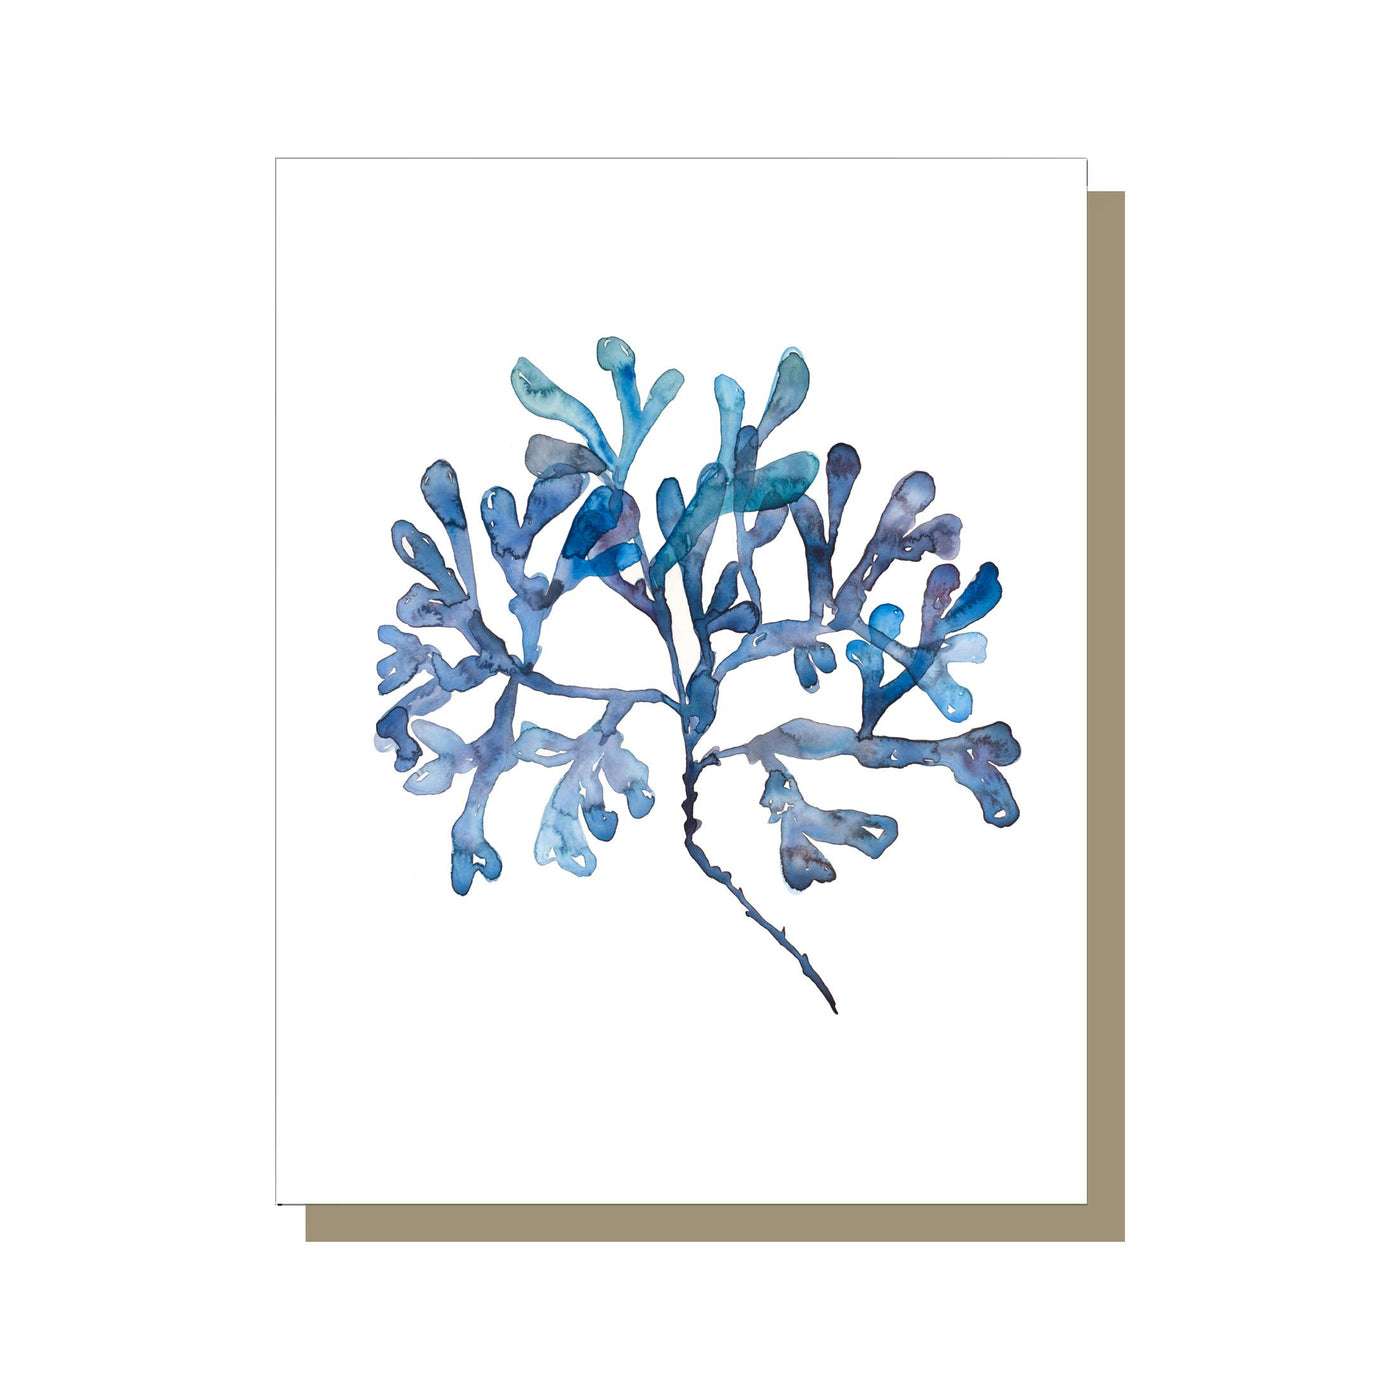 Seaweed Cards, watercolors by Jessalyn Haggenjos